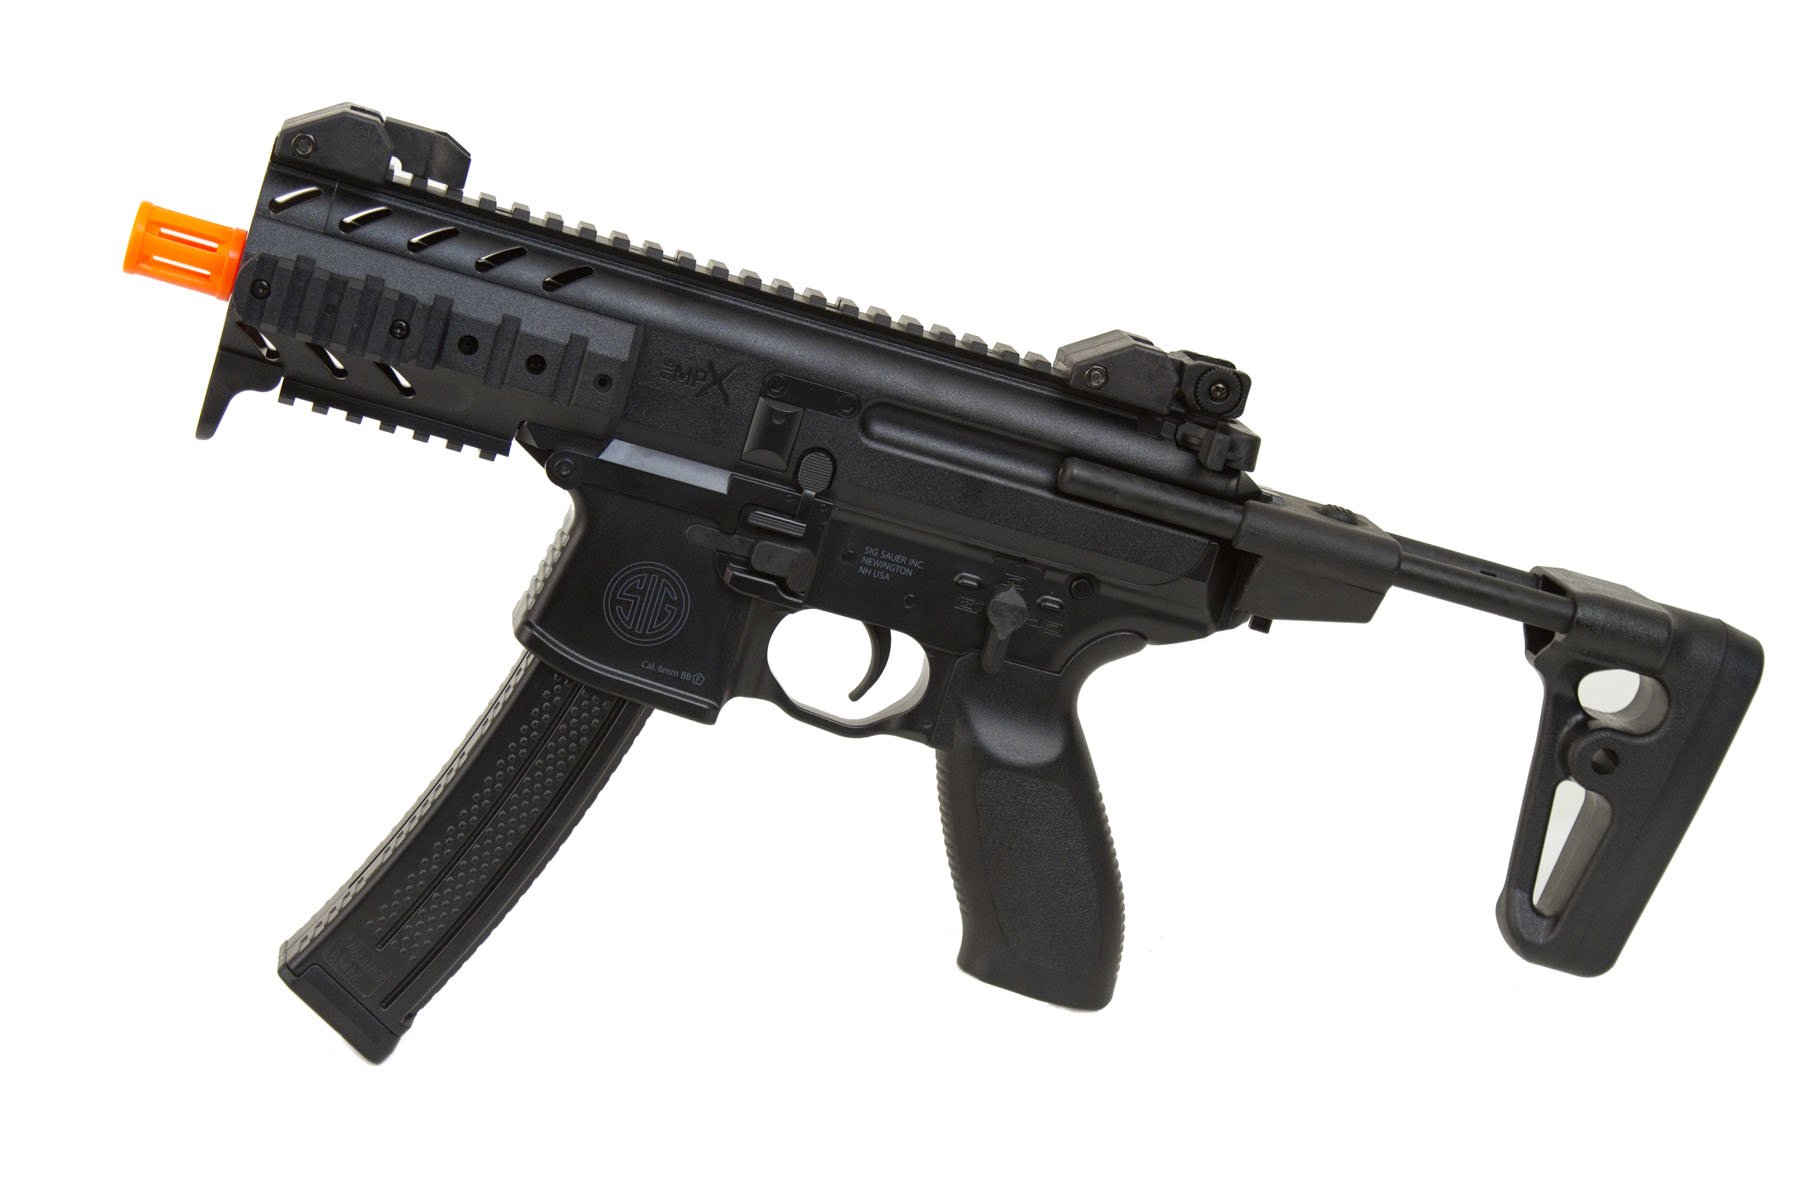 SIG Sauer Licensed P226 Spring Powered Airsoft Pistol - (Black